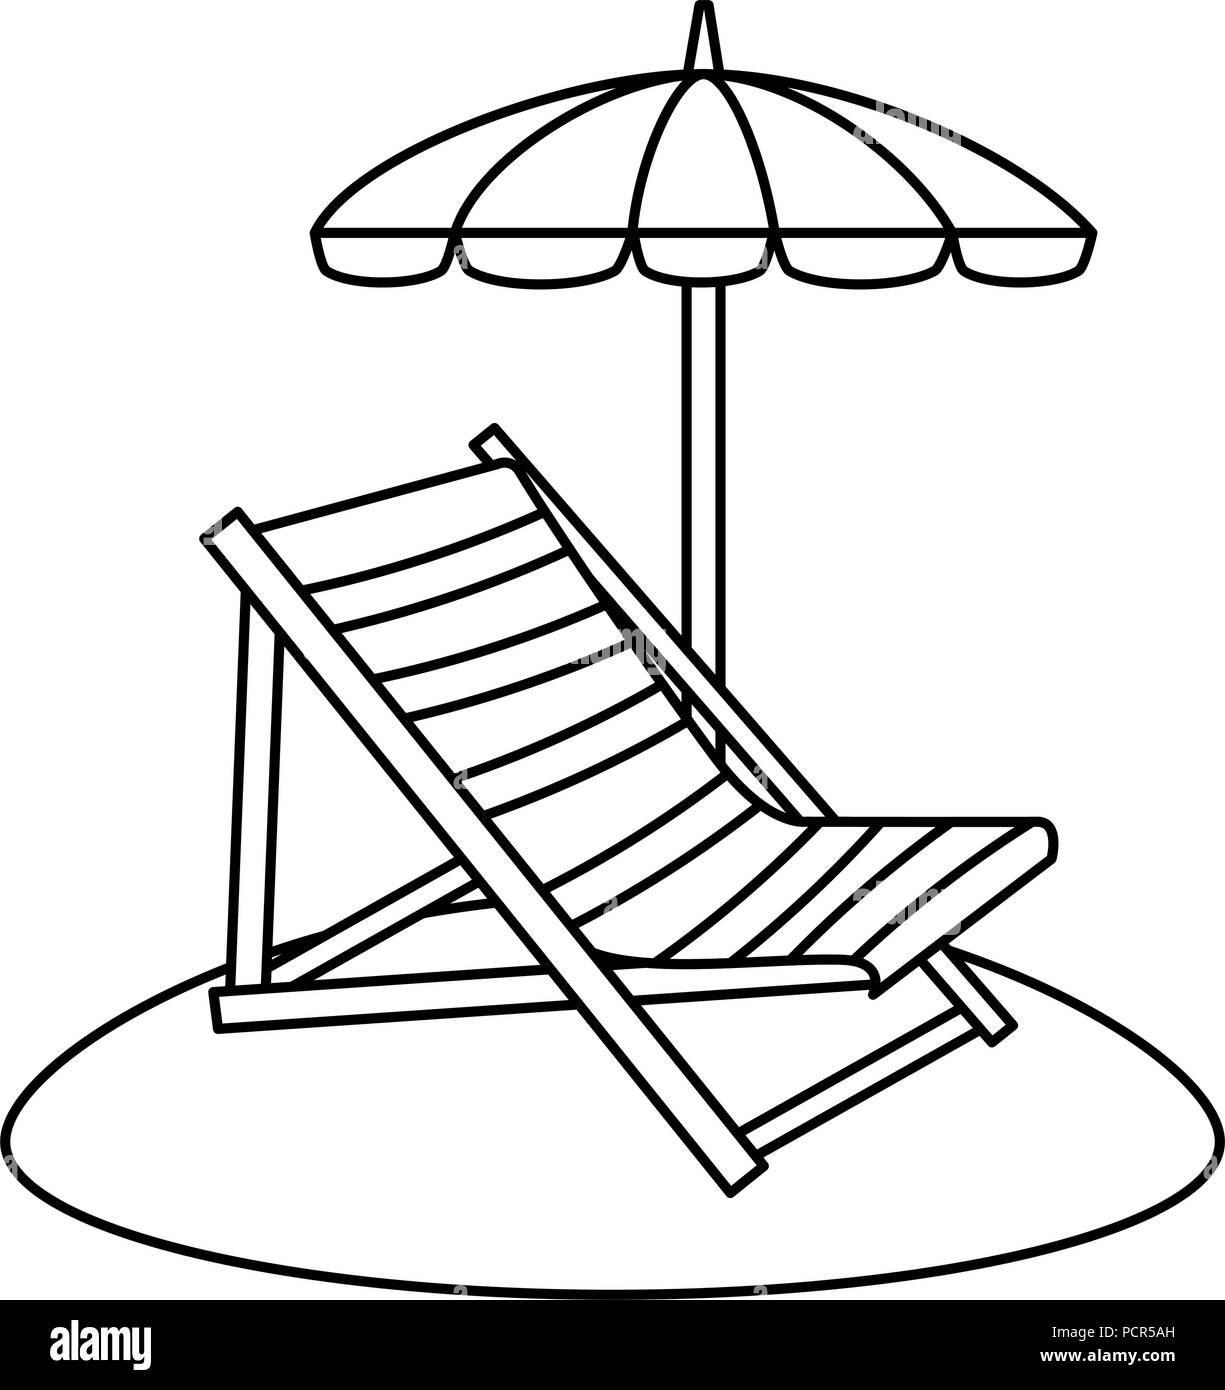 Featured image of post How To Draw A Beach Chair From Behind How to draw beach chair step by step beachchair chair beach